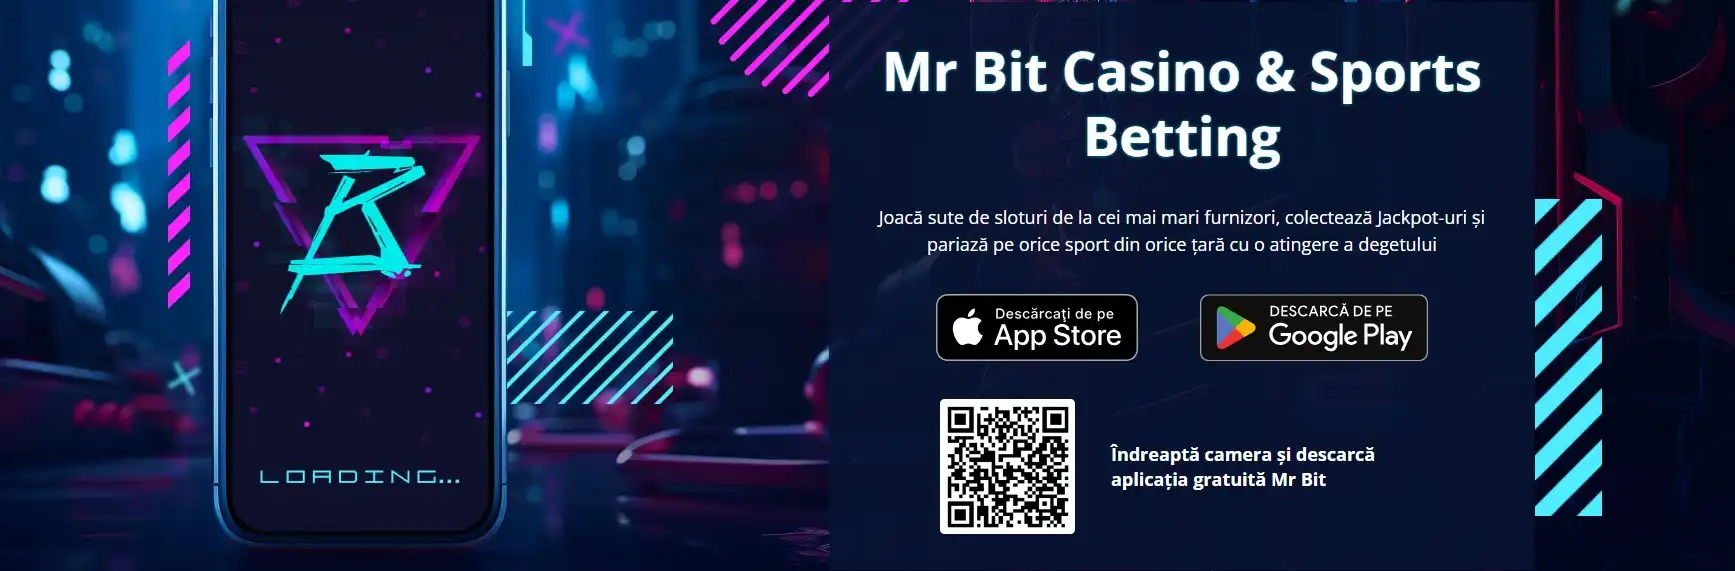 MrBit Casino Aplicația